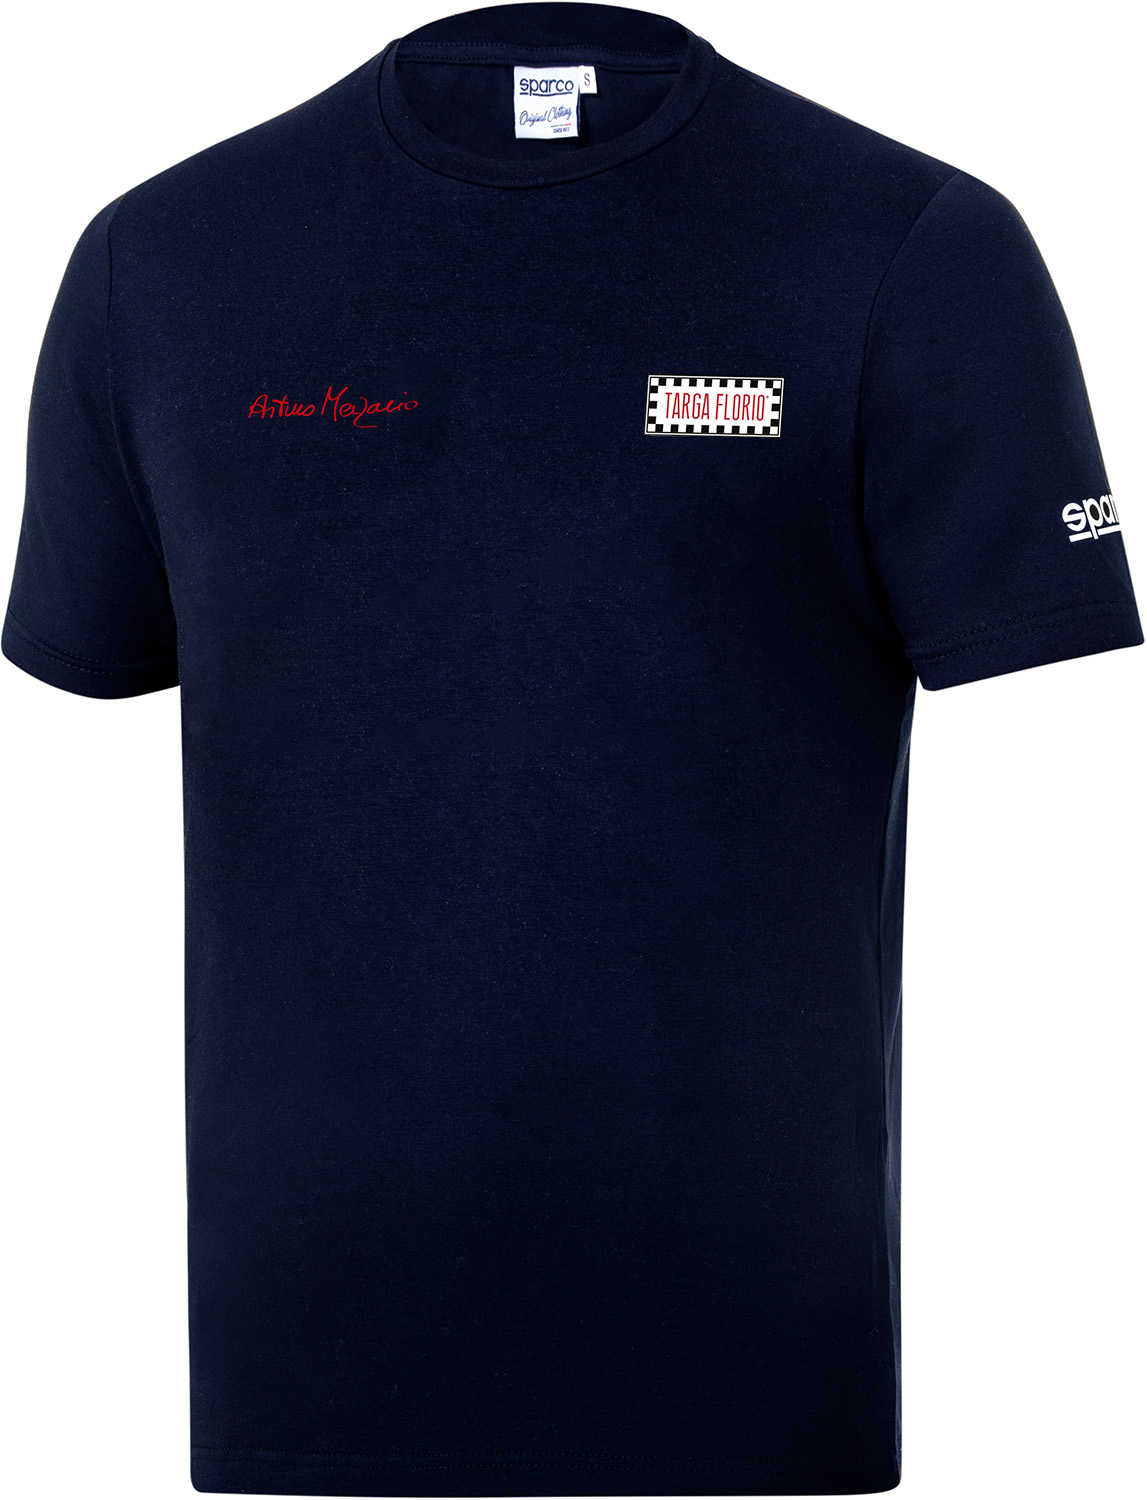 T-Shirt Targa Florio | Arturo Merzario